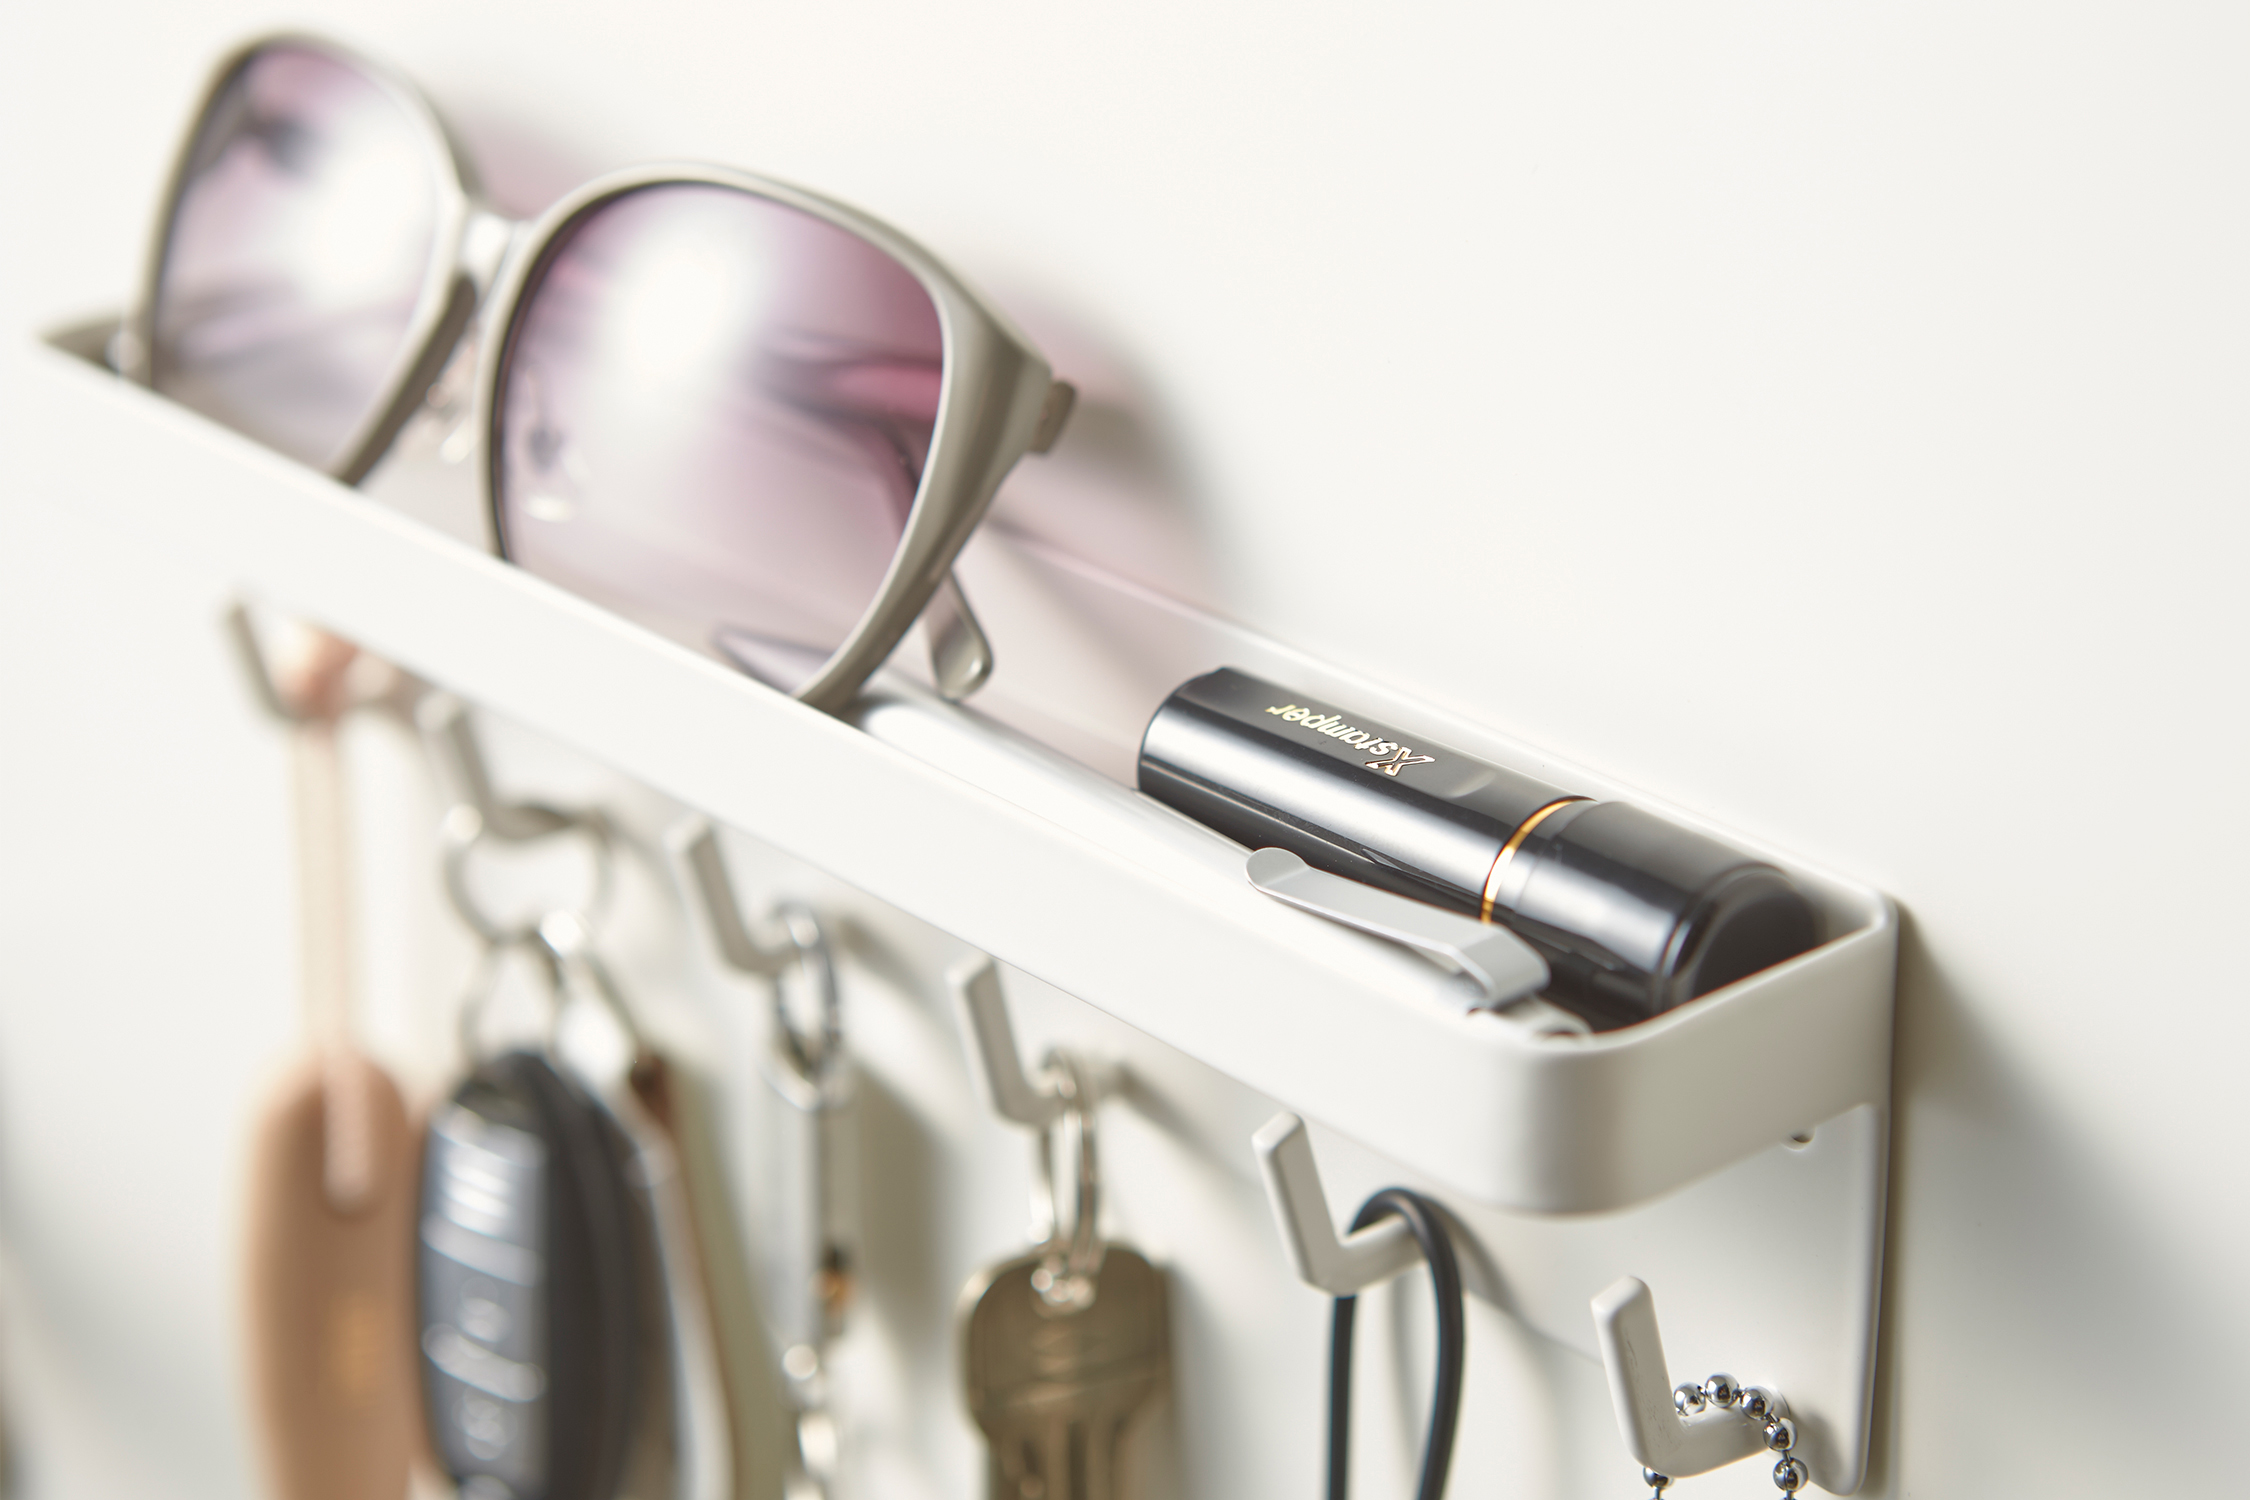 Close up side view of Yamazaki Home white Magnetic Key Holder holding keys, sunglasses, and items.